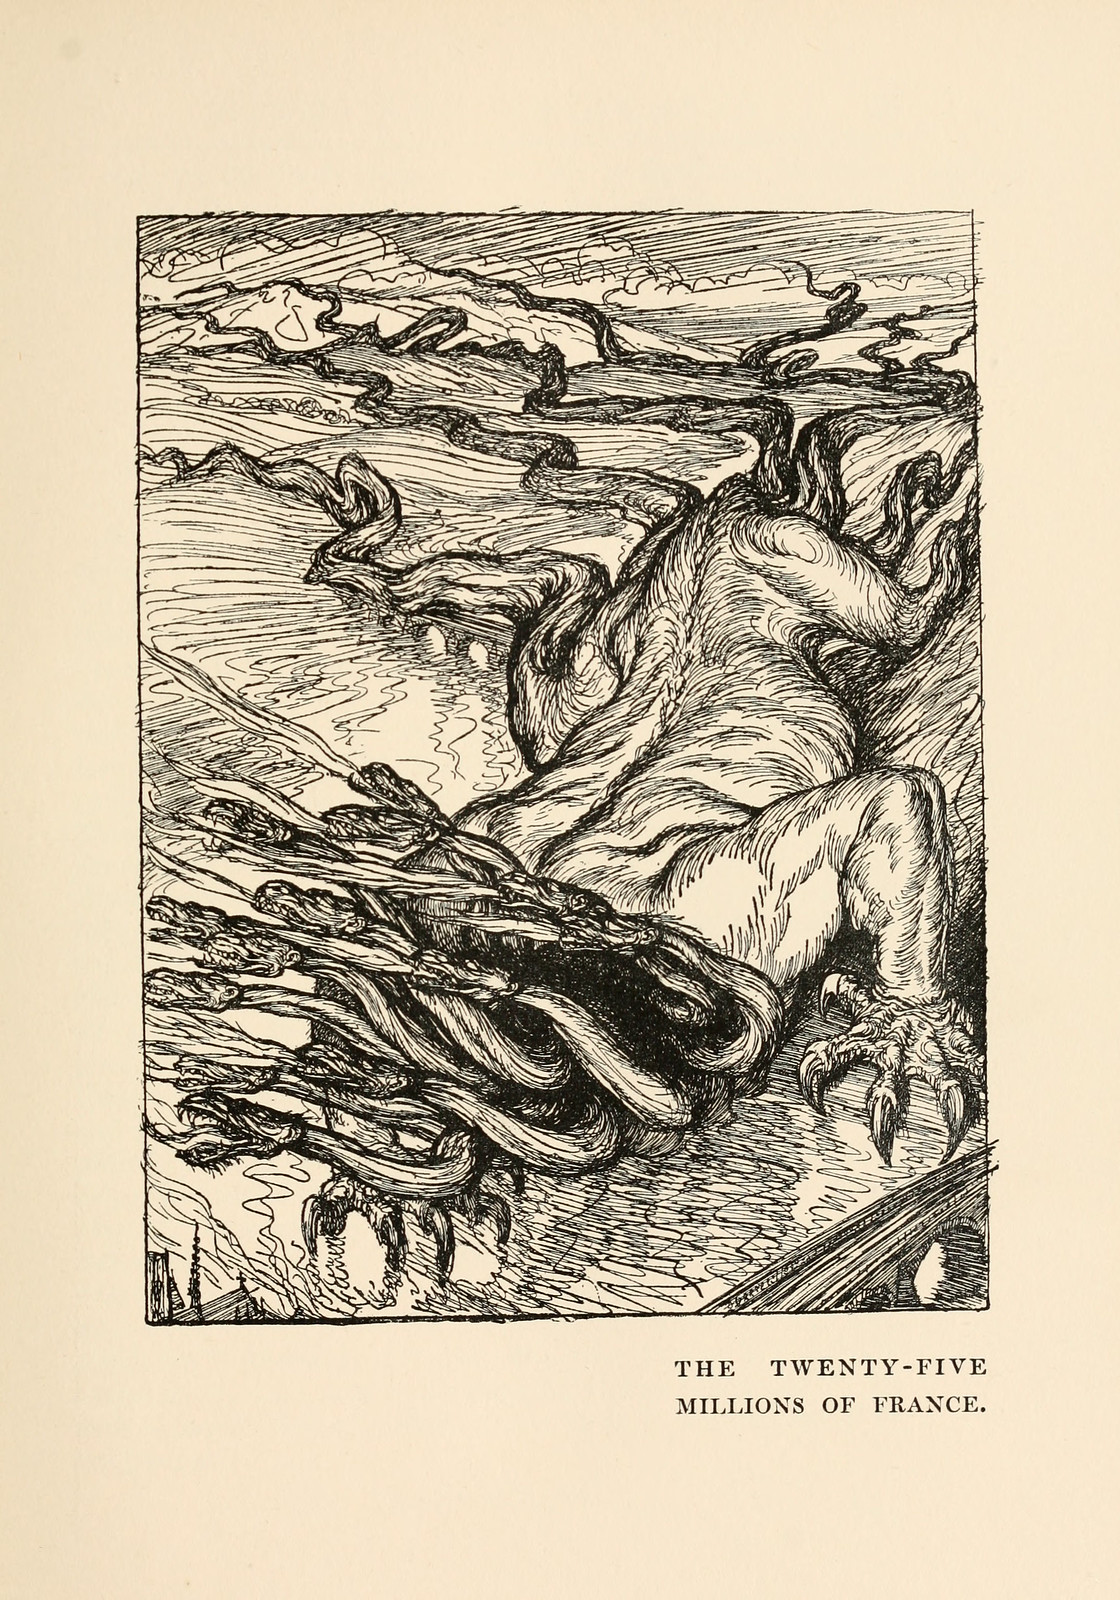 Edmund Joseph Sullivan - The Twenty Five, illustration from Thomas Carlyle's "The French Revolution" 1910